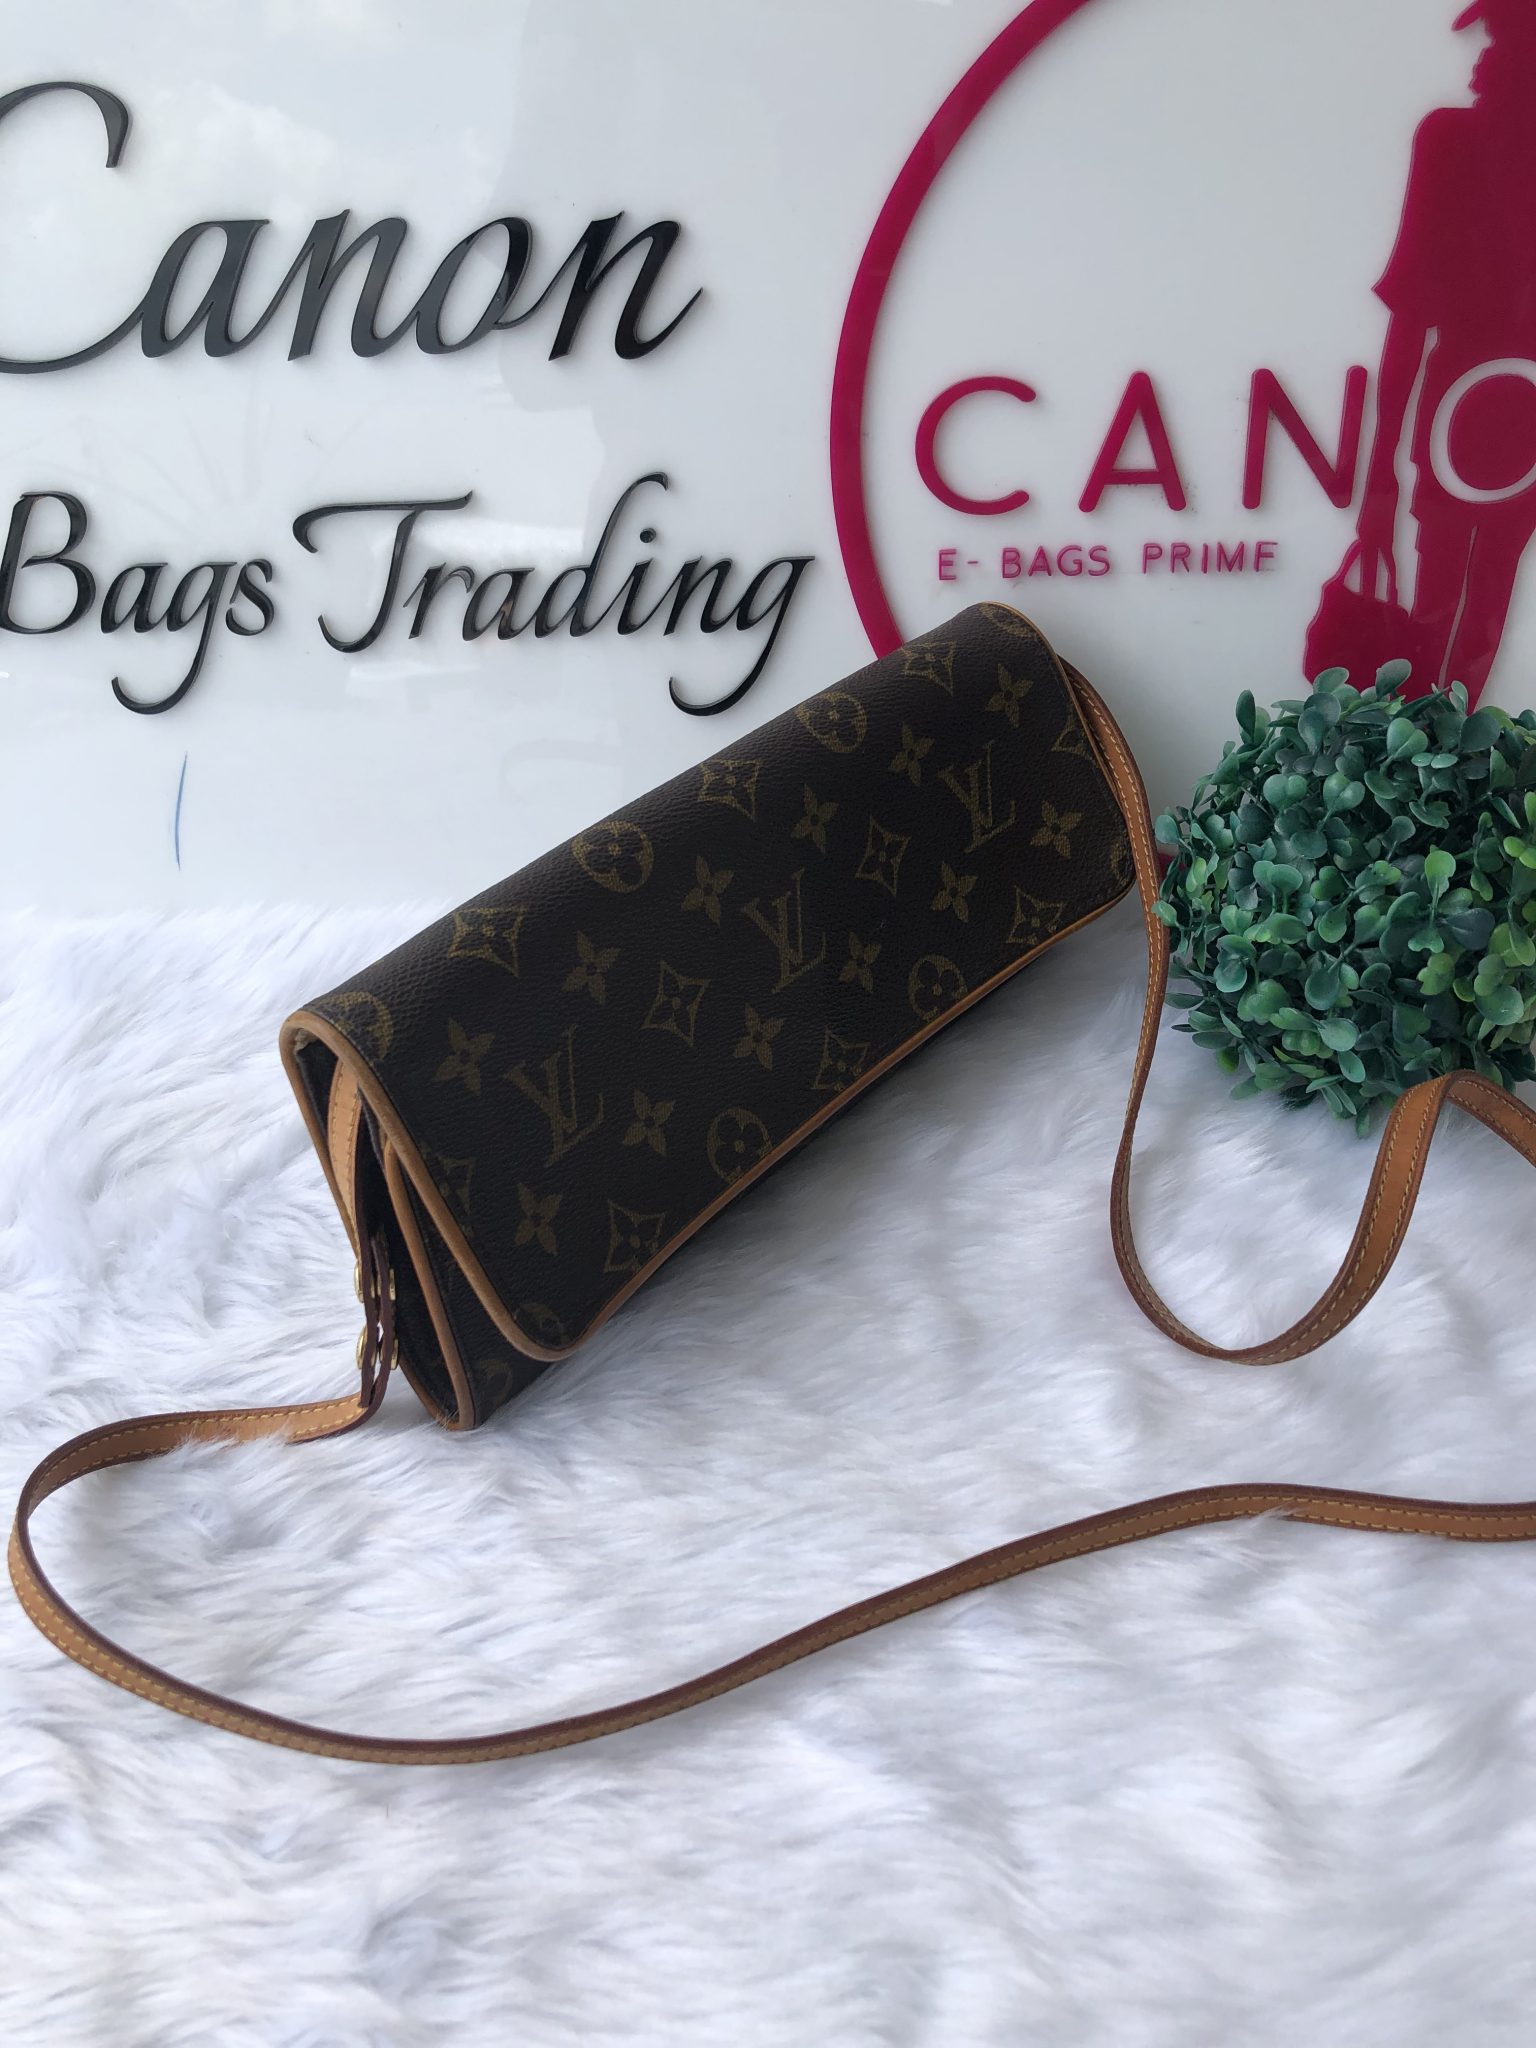 SOLD Louis Vuitton Monogram Pochette Sling Bag. Made in Spain - Canon E-Bags Prime